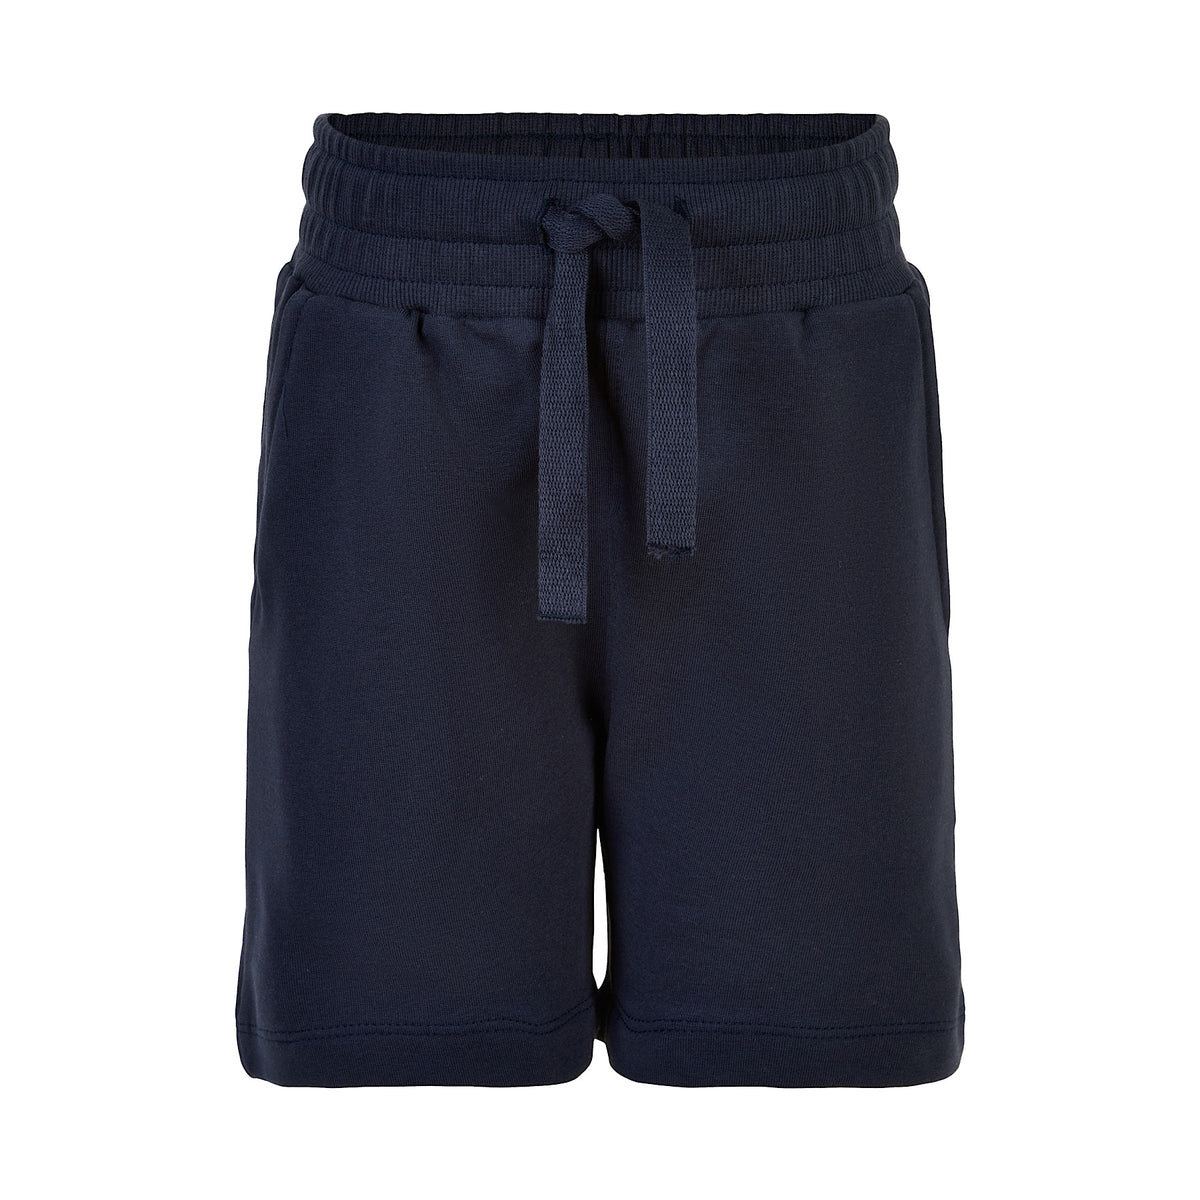 Navy Cotton Shorts